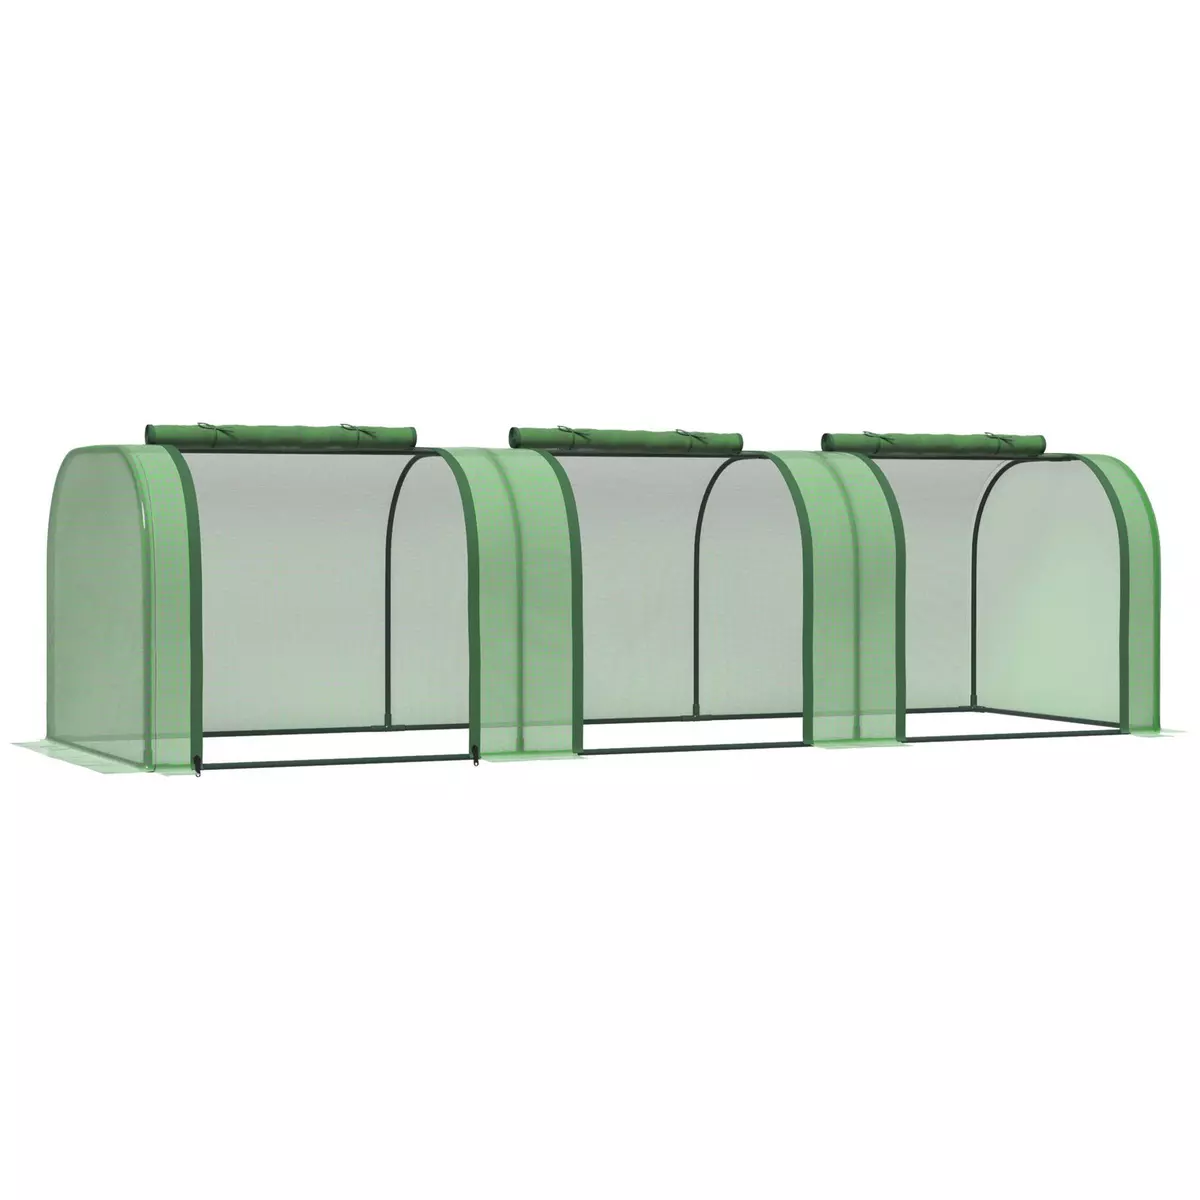 OUTSUNNY Mini serre de jardin serre à tomates 2,95L x 1l x 0,8H m acier PE haute densité 140 g/m² anti-UV 3 fenêtres zip enroulables vert